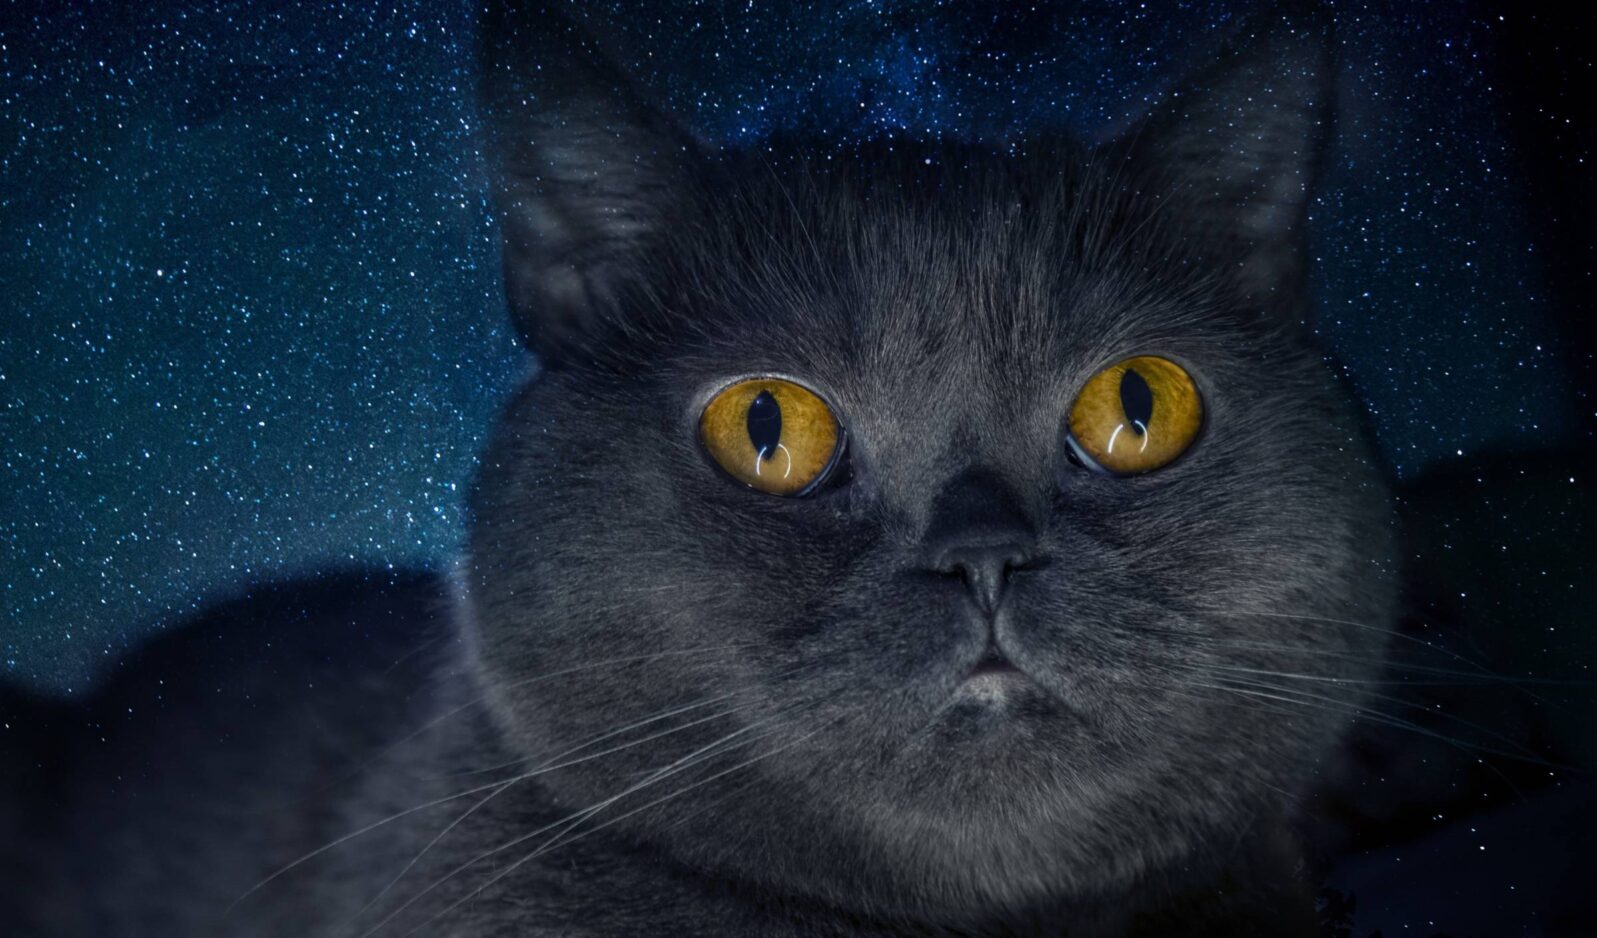 Cat in front of starry sky